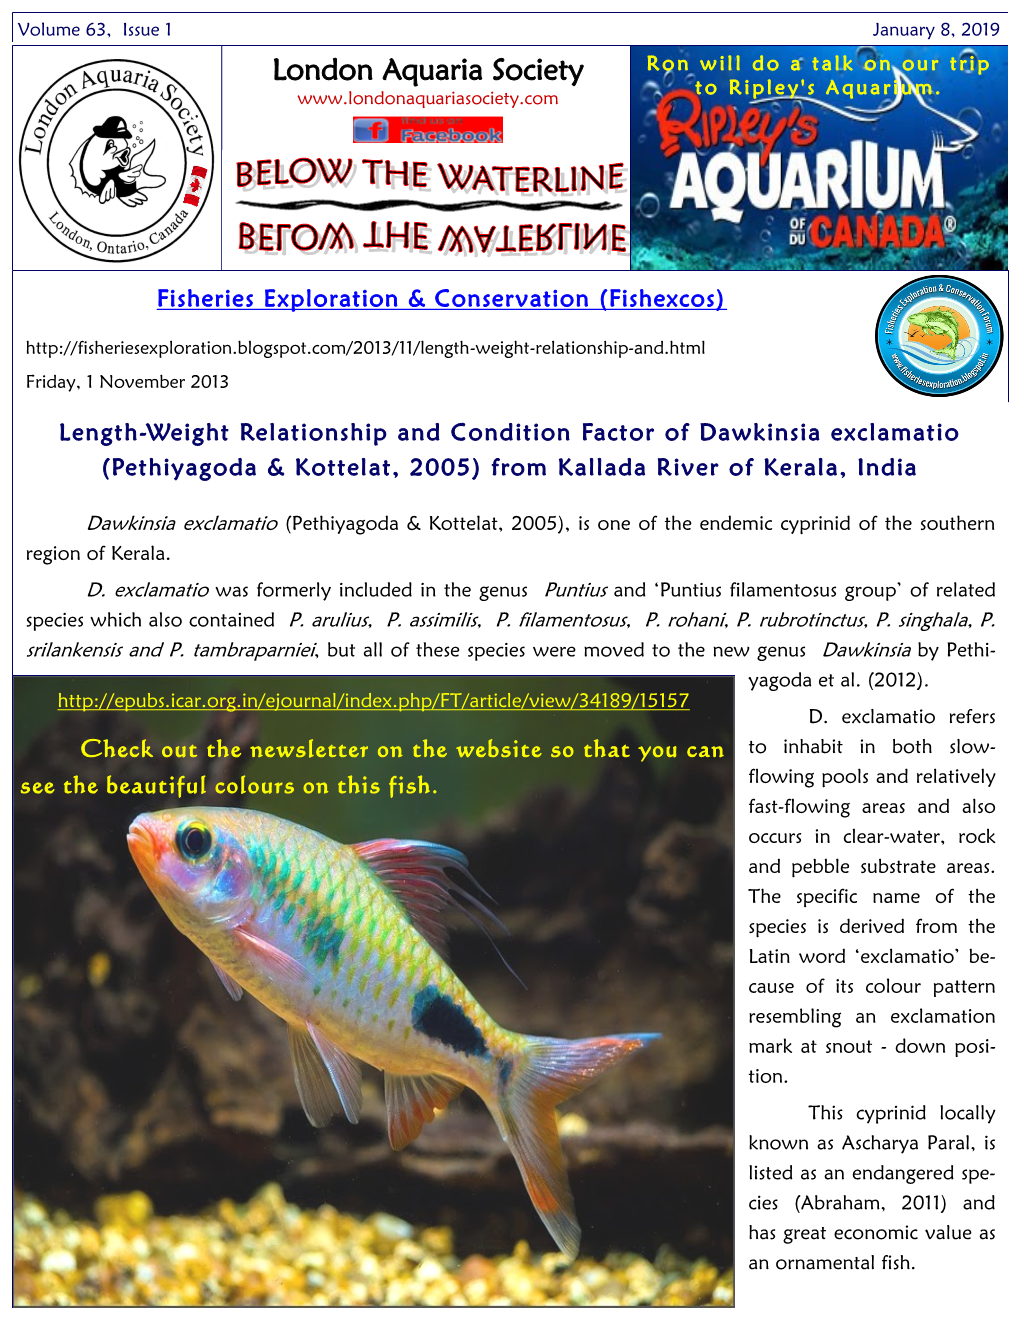 January 8, 2019 London Aquaria Society Ron Will Do a Talk on Our Trip to Ripley's Aquarium